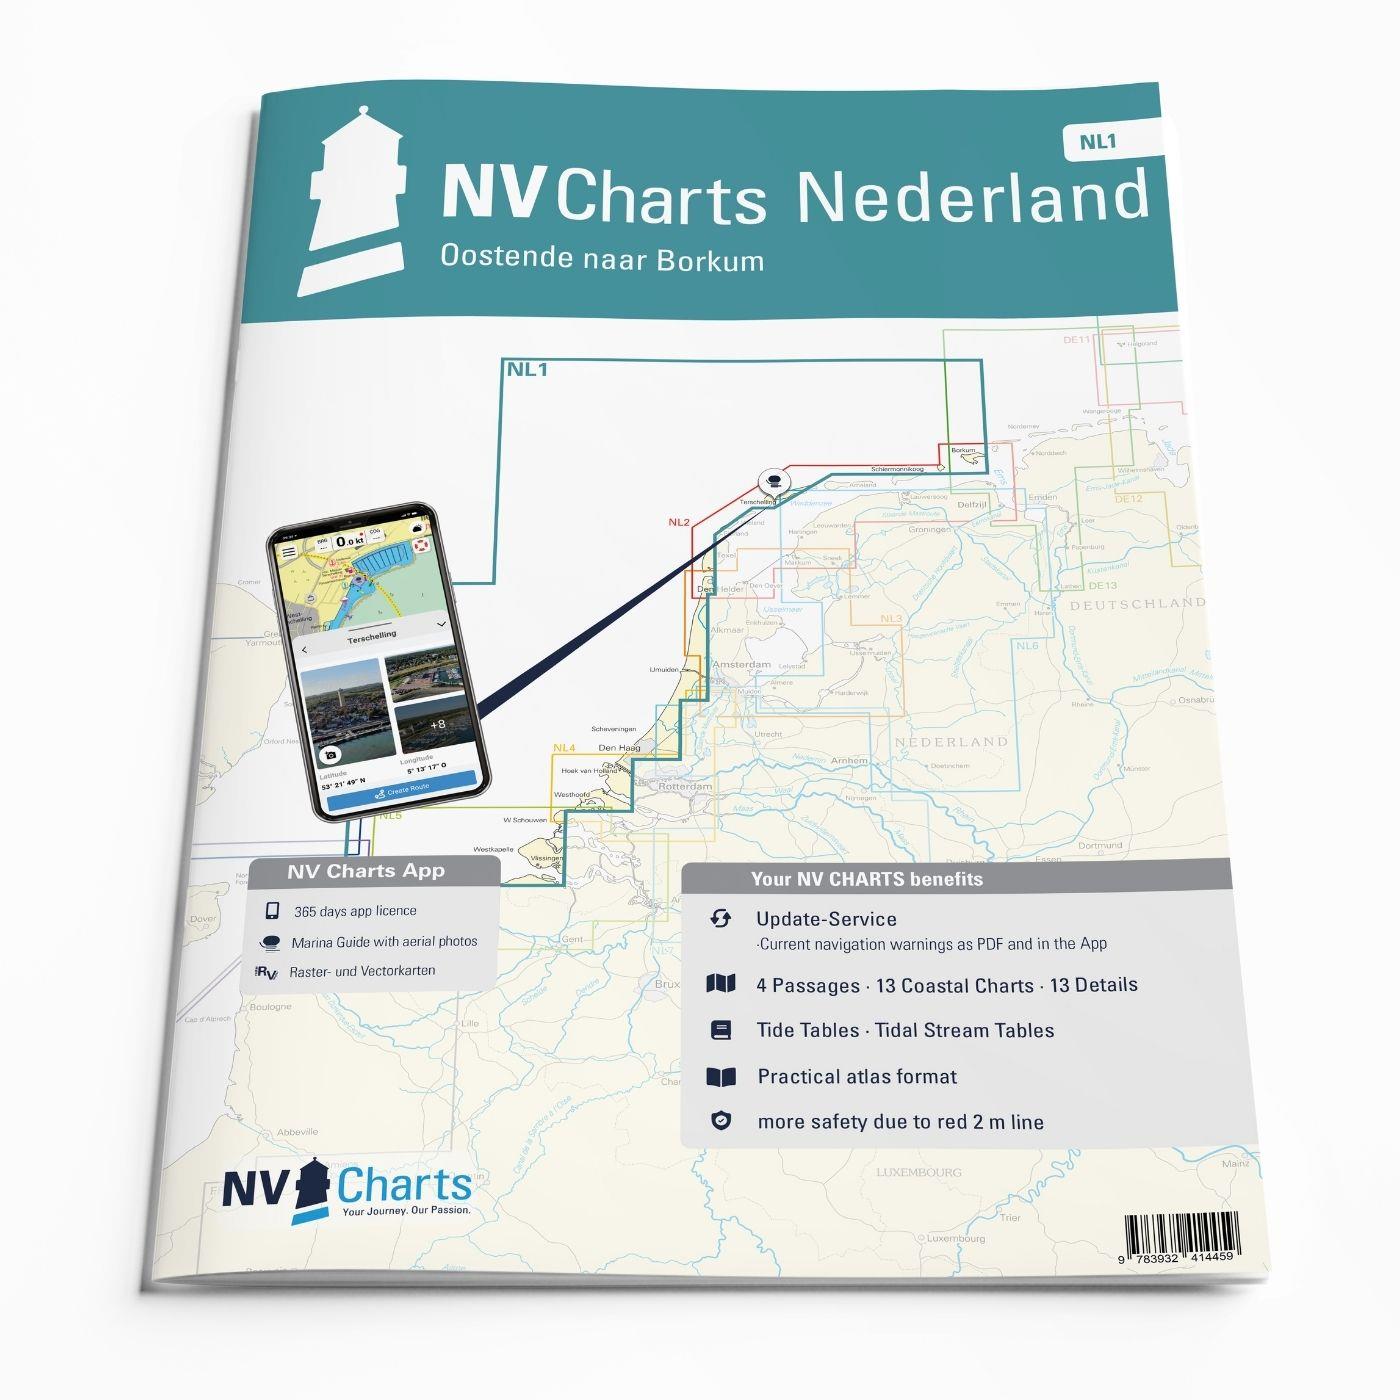 NV Charts Nederland NL1 - Borkum naar Oostende